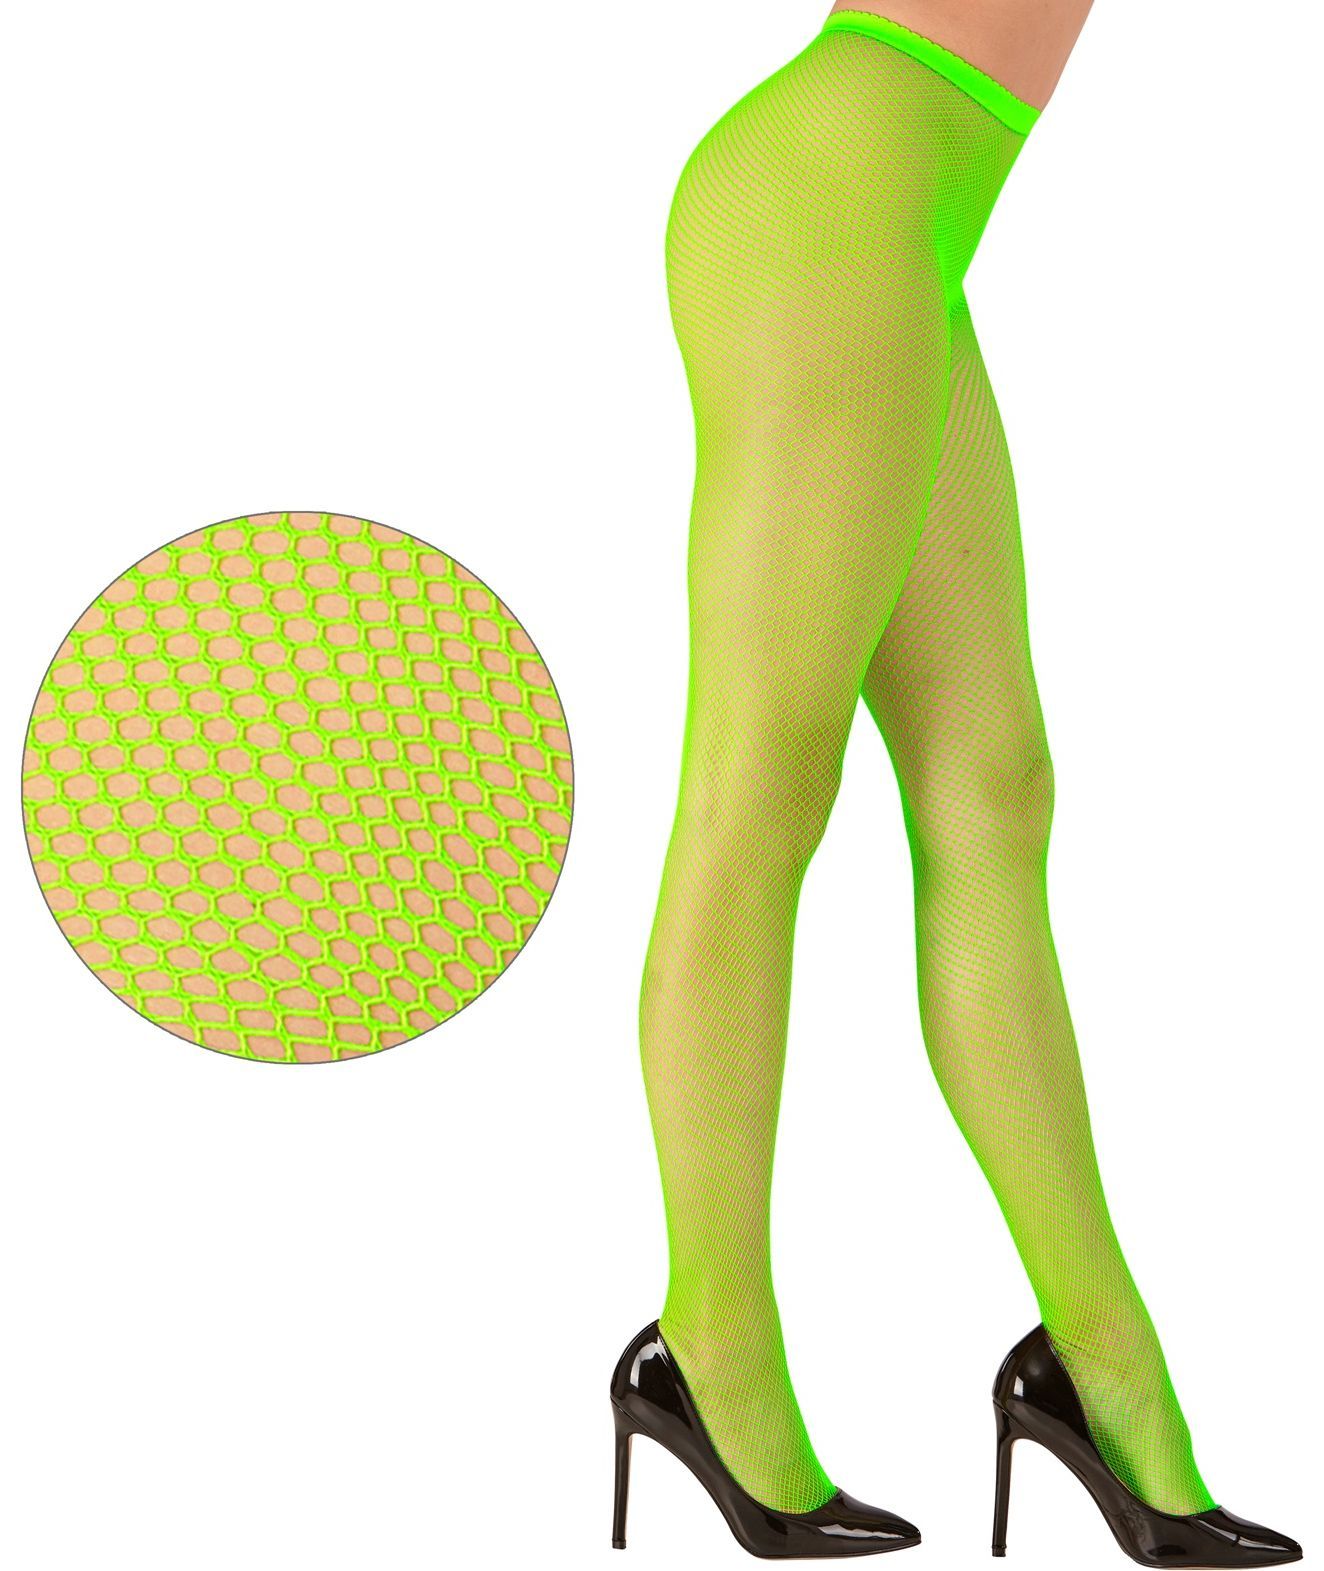 Neon groene visnet panty